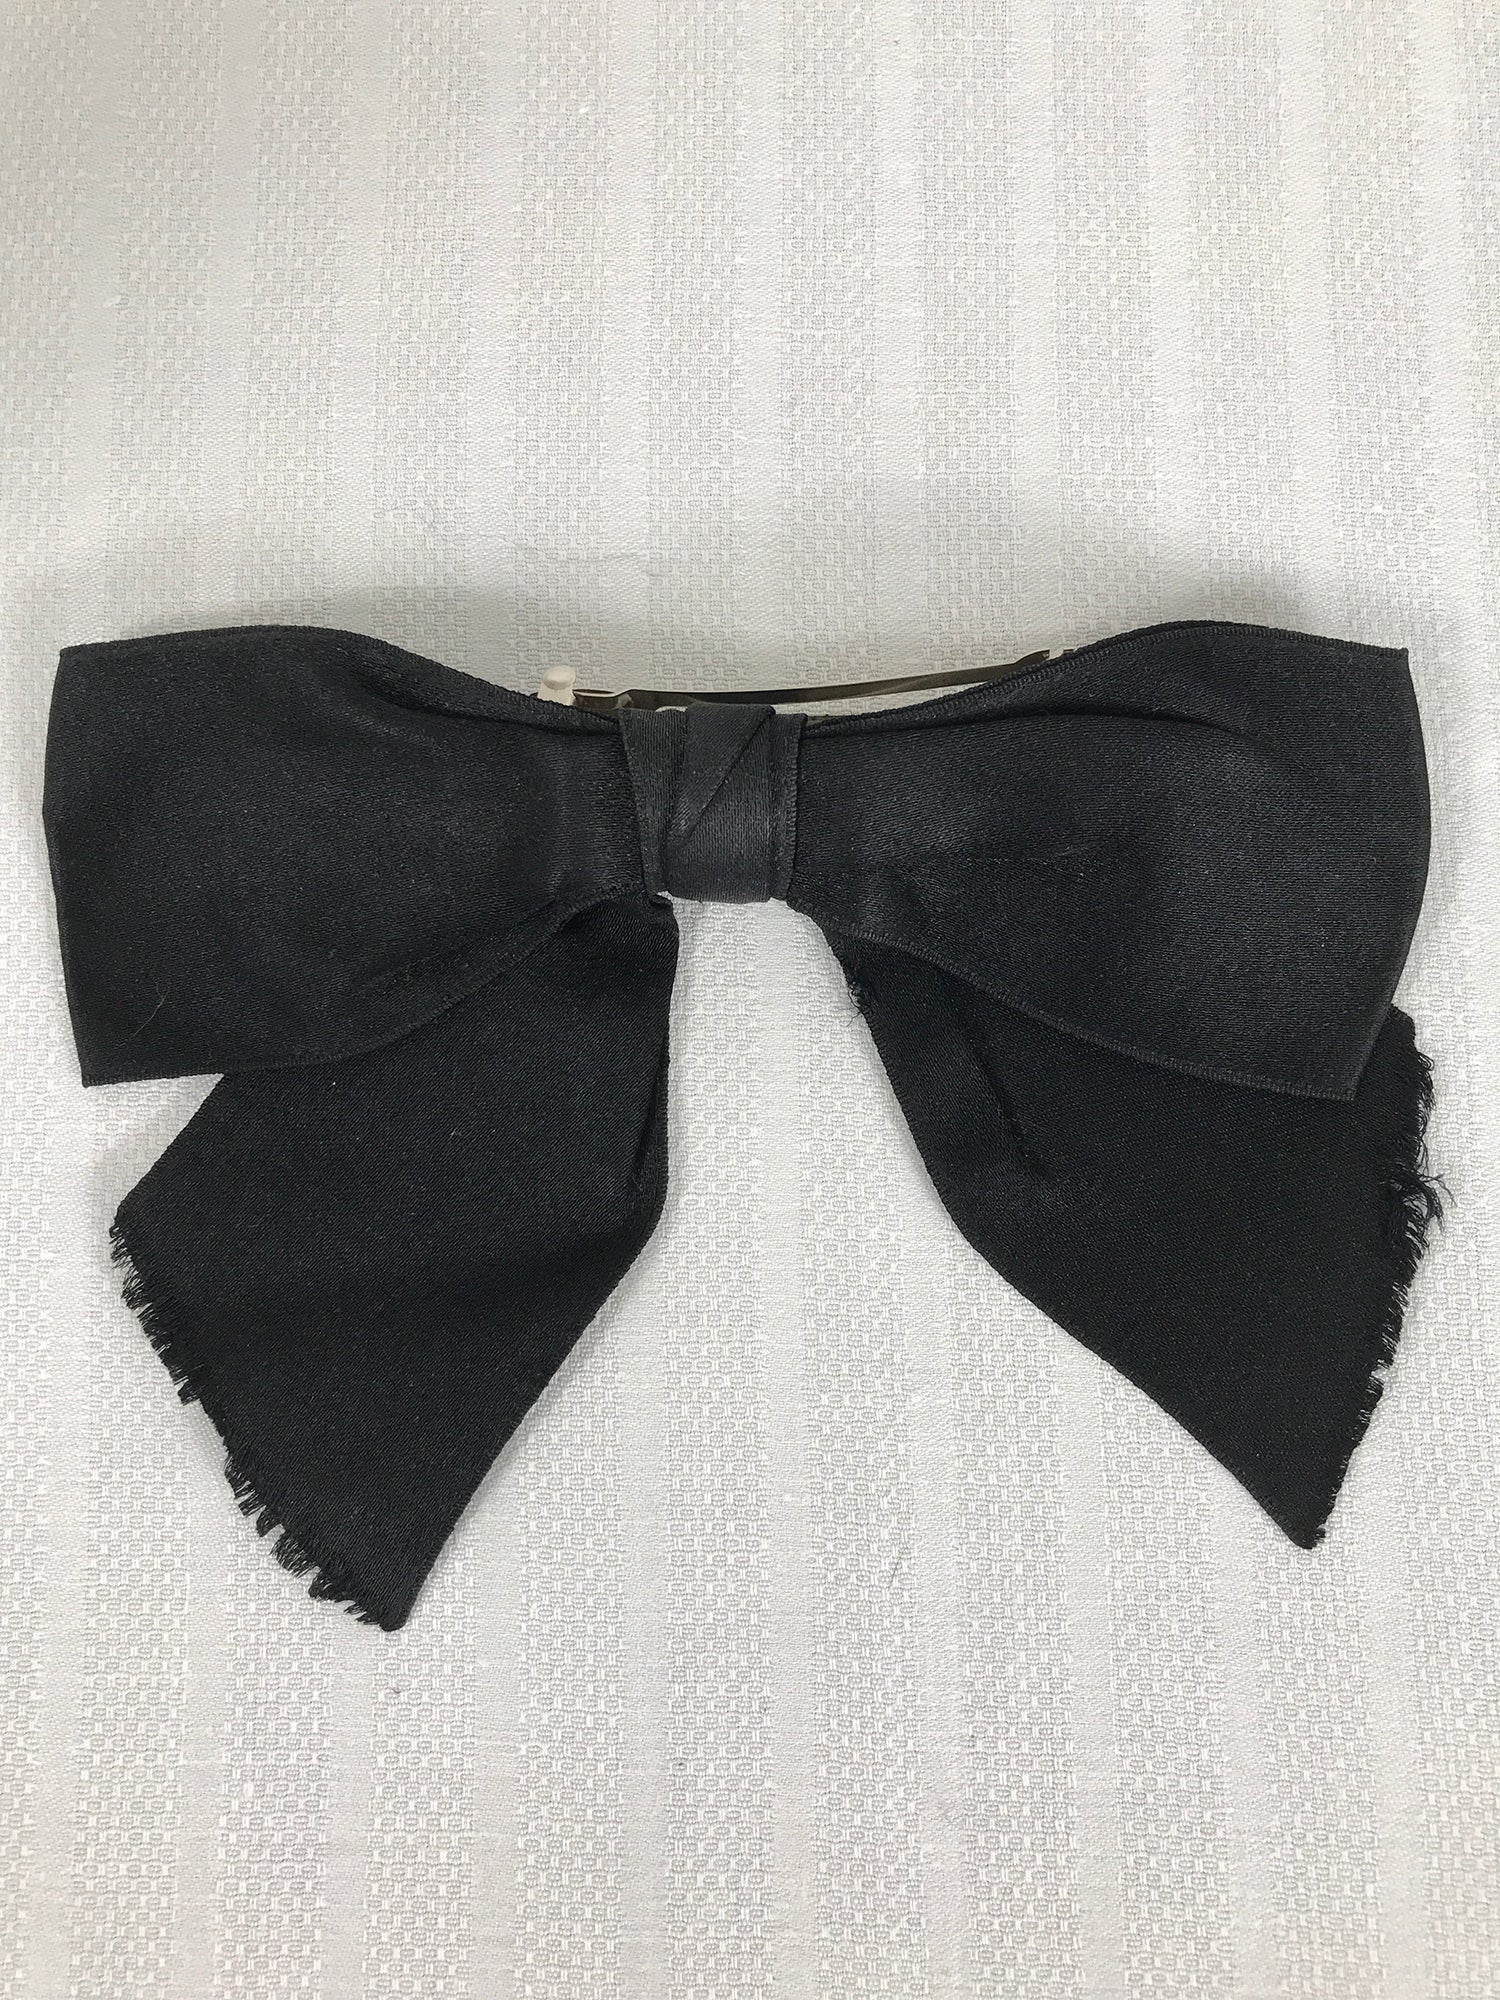 Chanel Hair Bow Tie, Black Silk, New in Box WA001